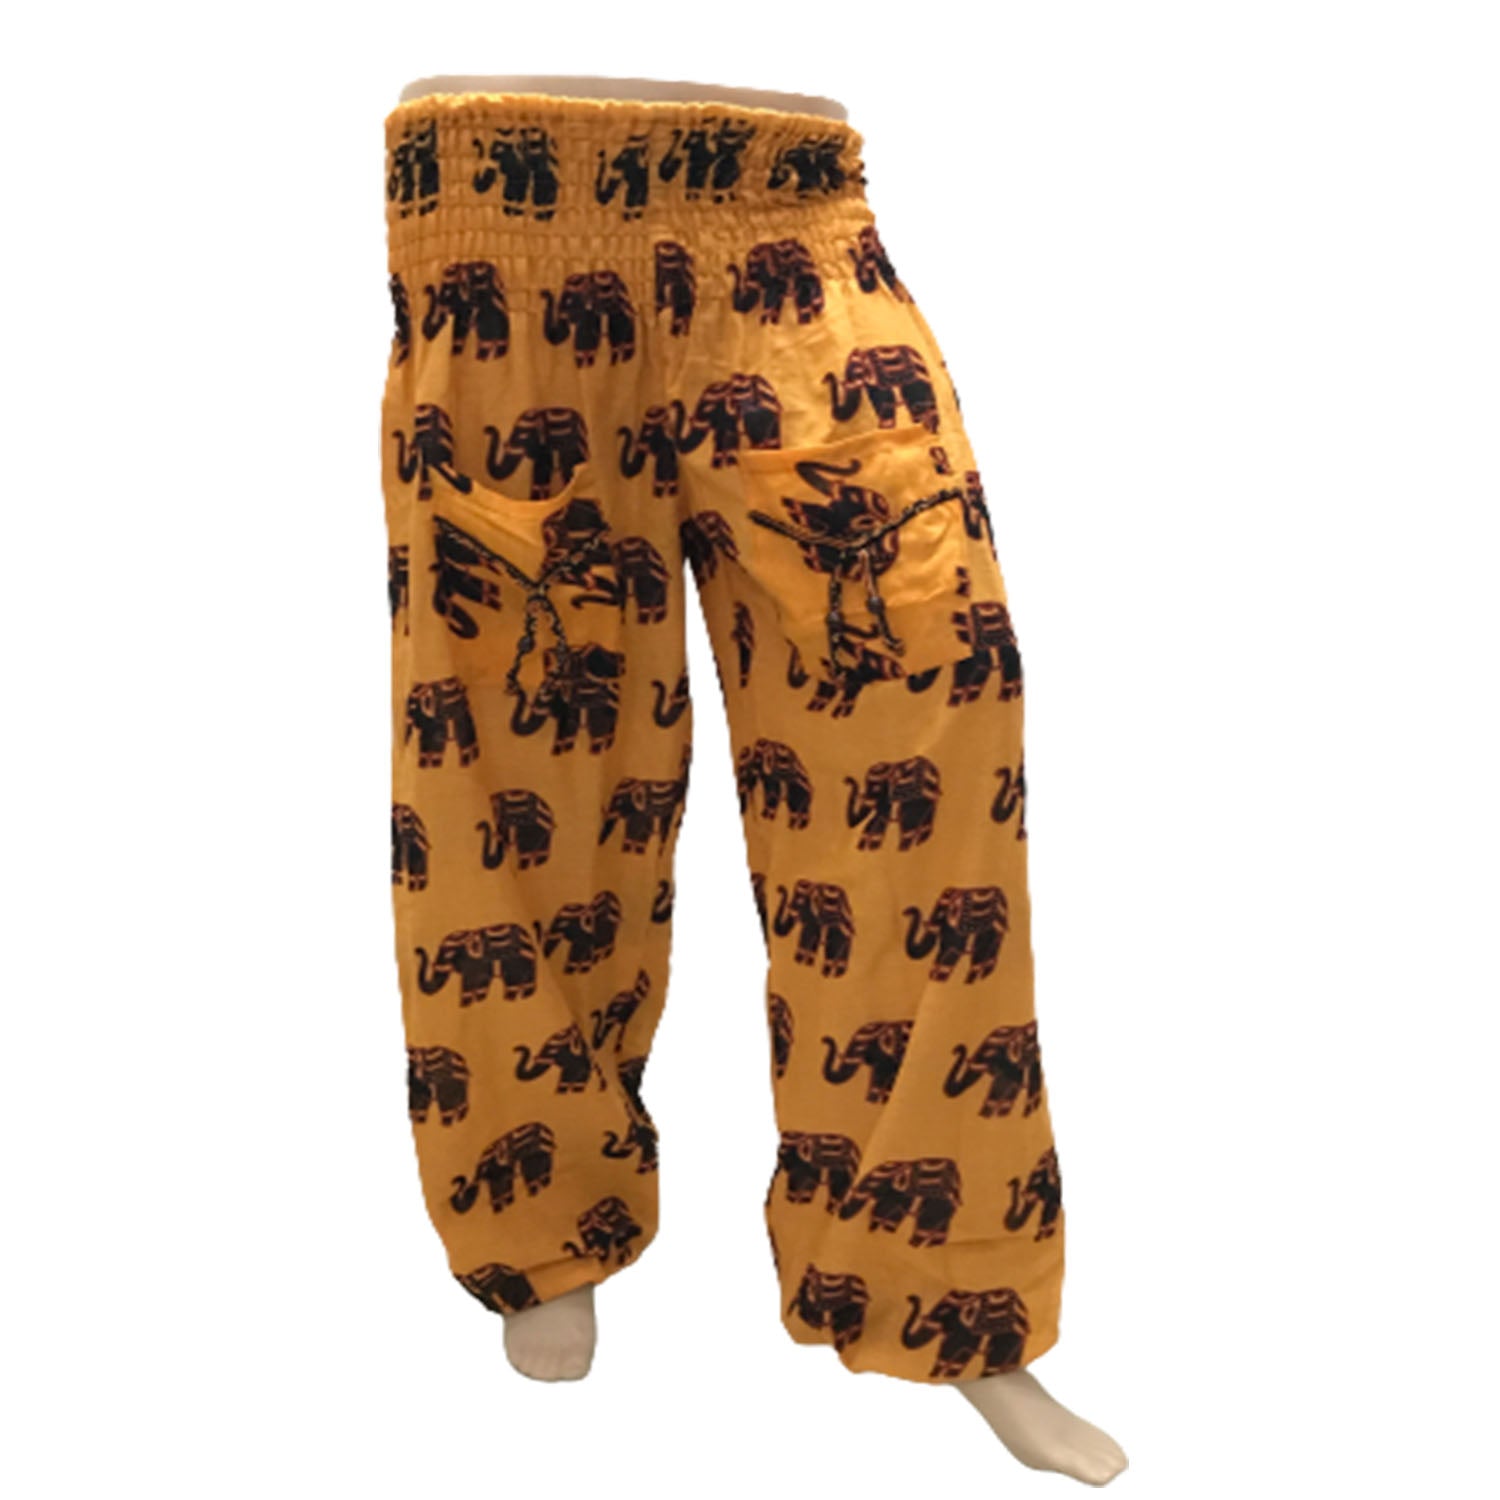 Ganesha Handicrafts, Cuffed Elephant Print Casual Trousers, Cuffed Casual Trousers, Elephant Print Trousers, Yellow colour Cuffed Elephant Print Casual Trousers.